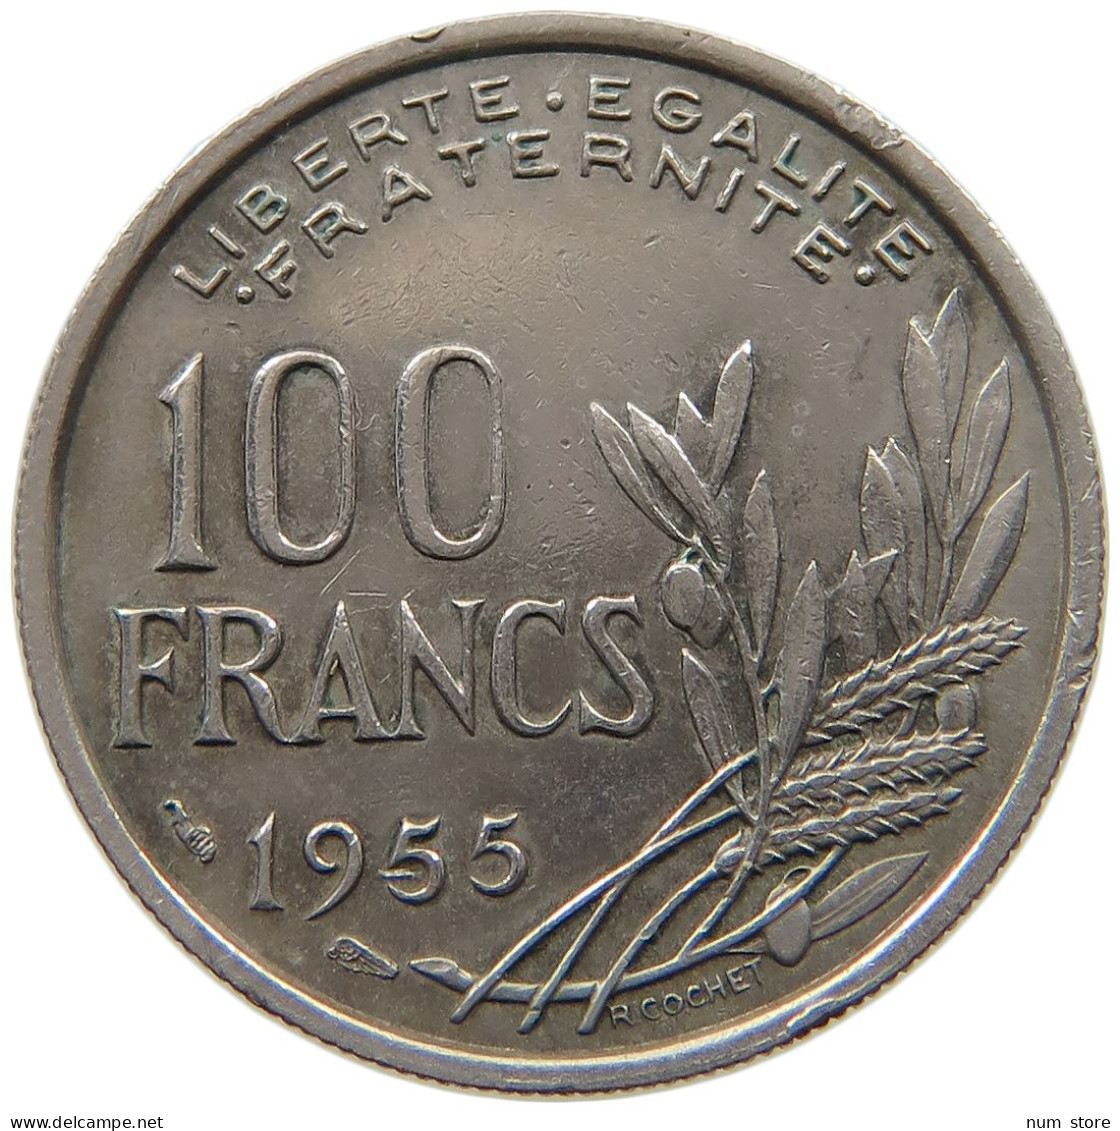 FRANCE 100 FRANCS 1955 #a031 0079 - 100 Francs